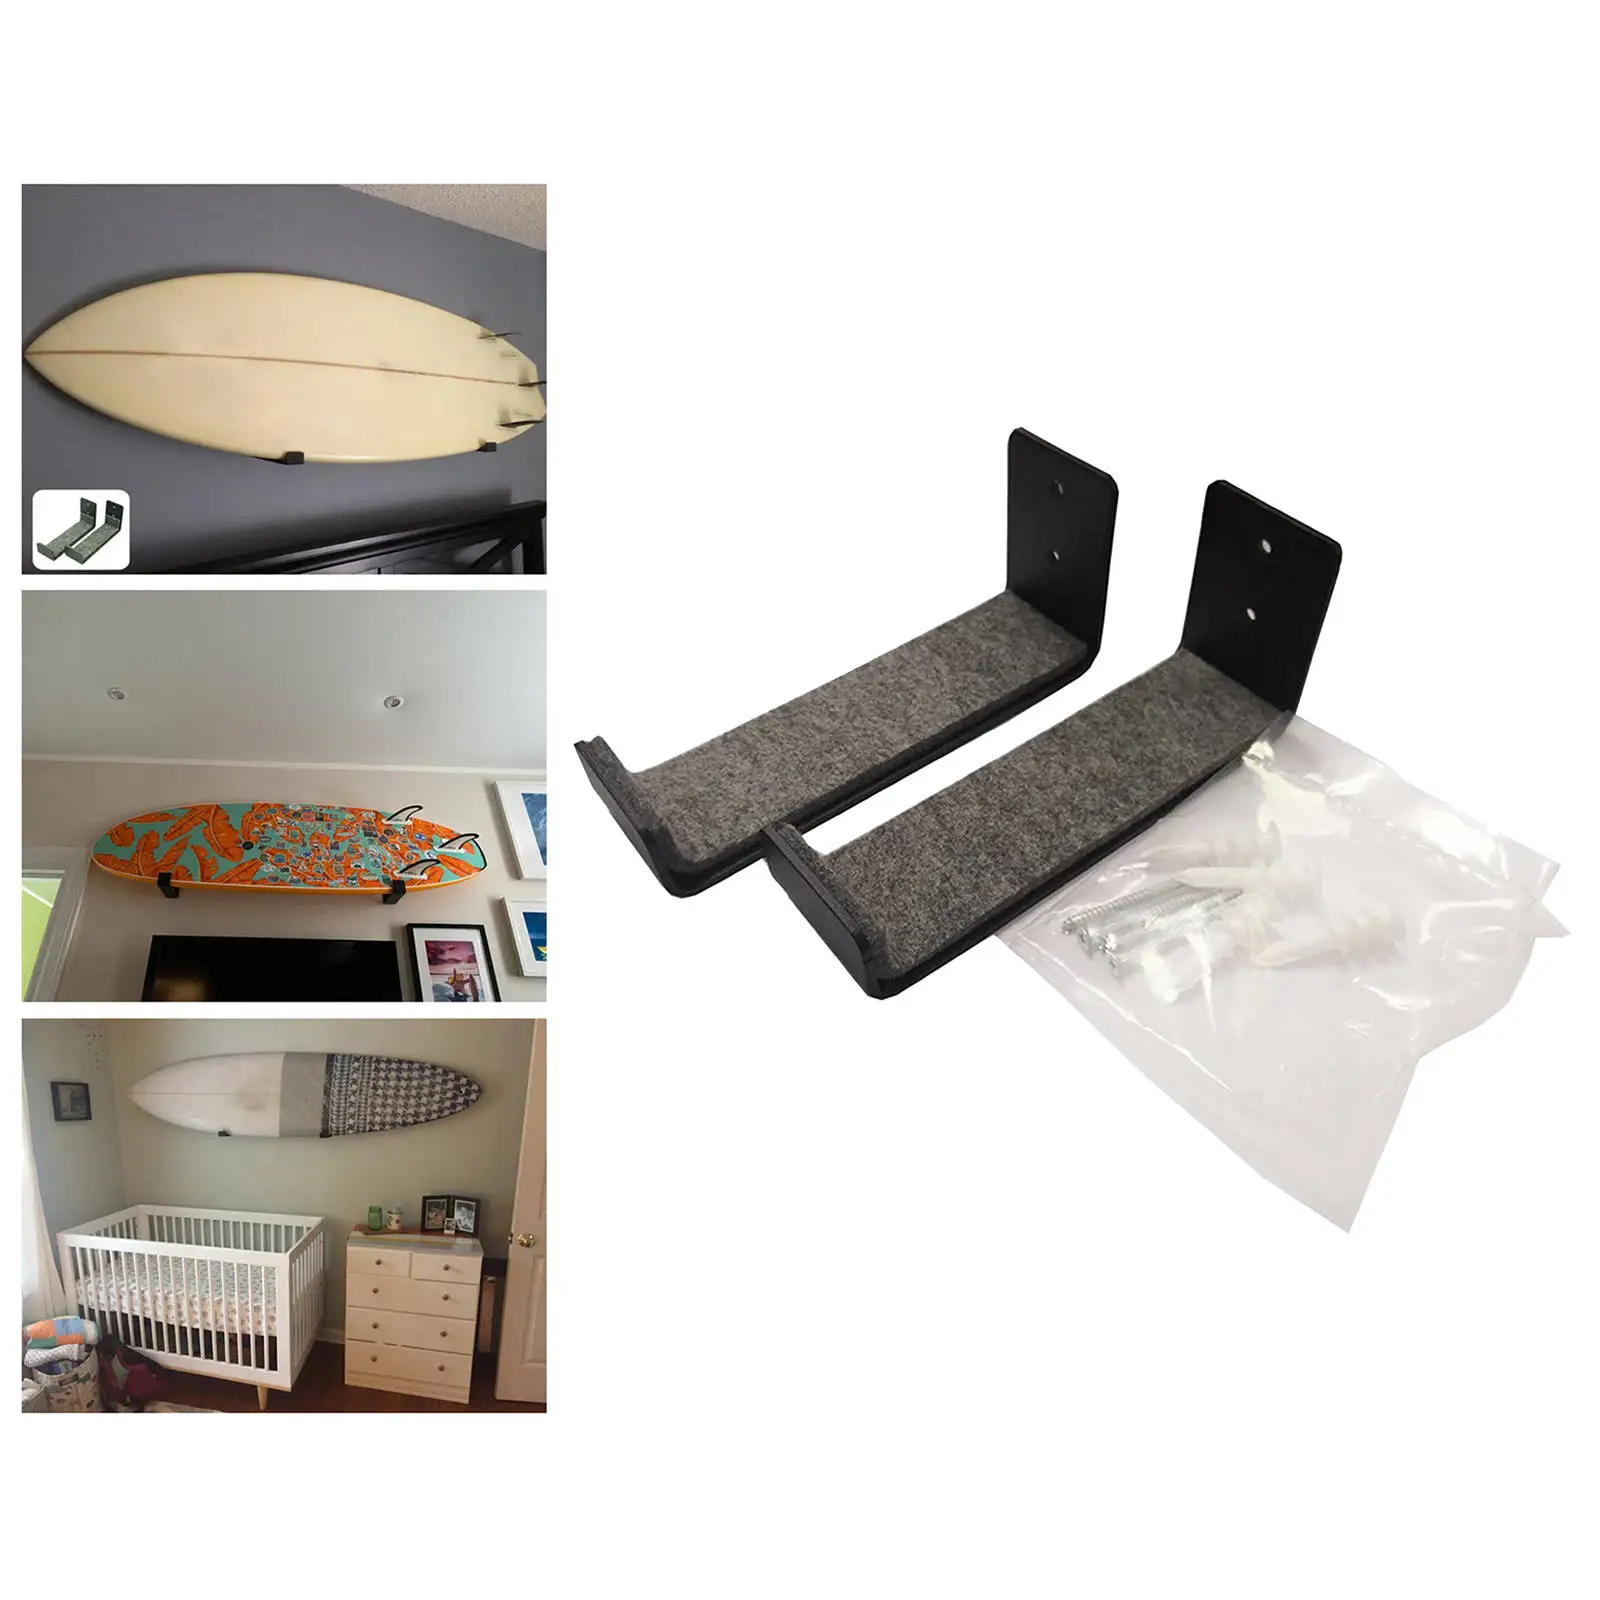 rack de parede surfboard shortboards cabide peças ferramentas armazenamento titular expositor para banheiro